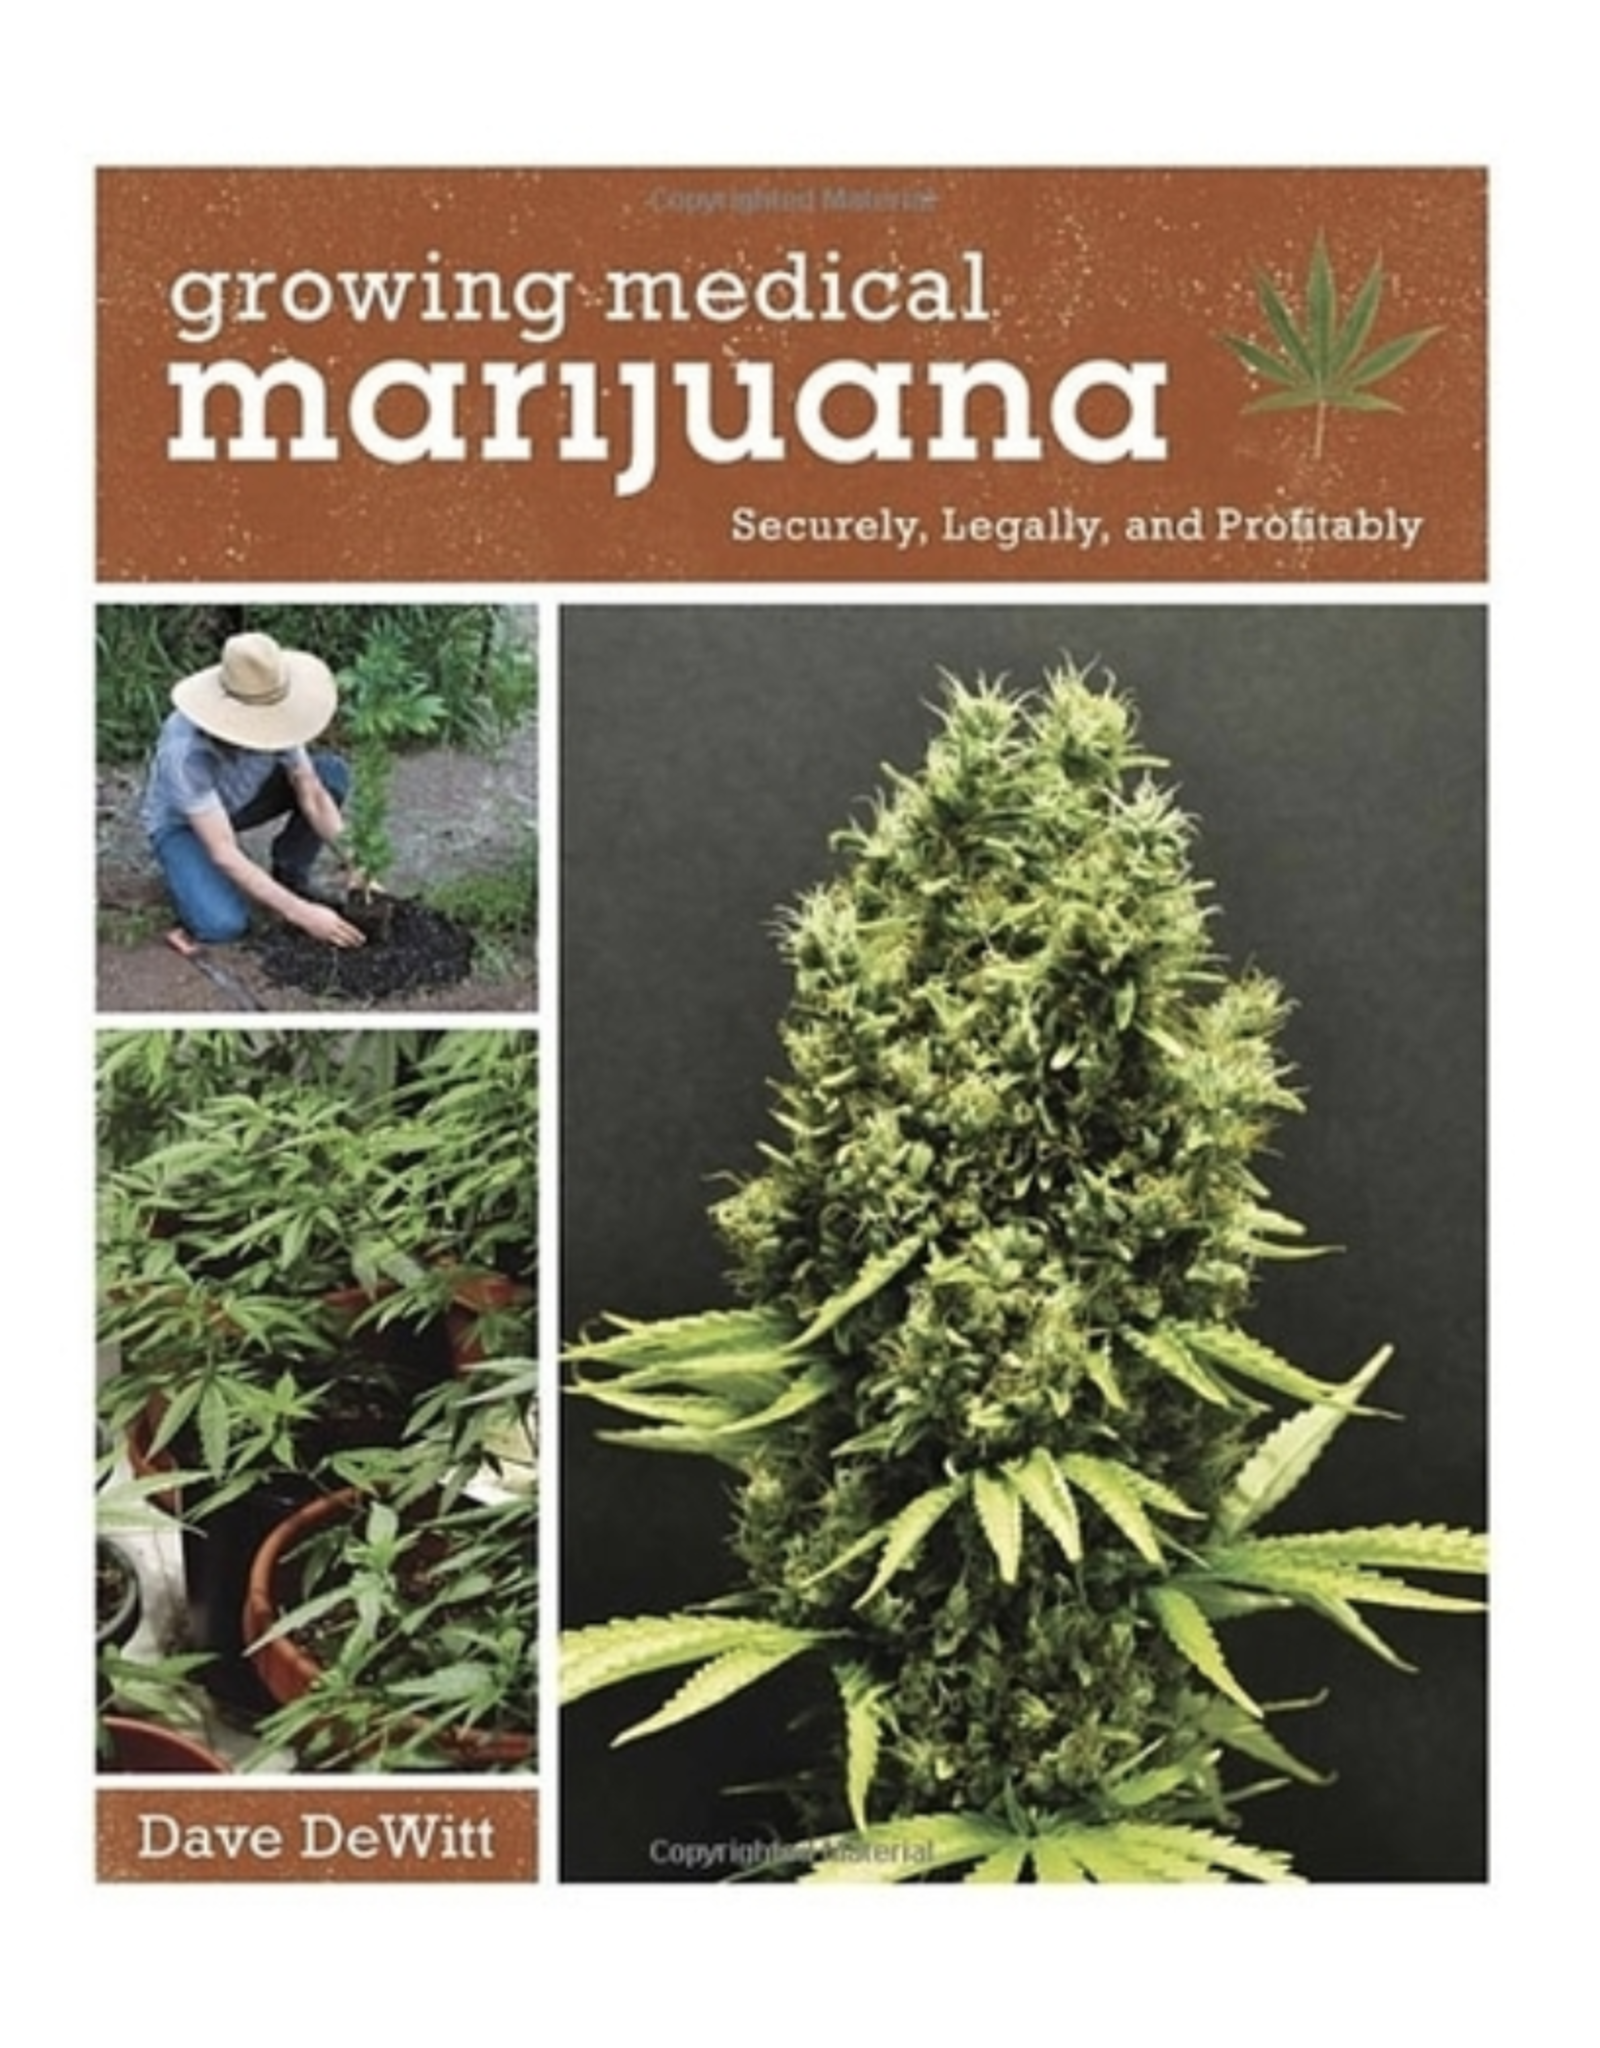 Growing Medical Marijuana by Dave Dewitt